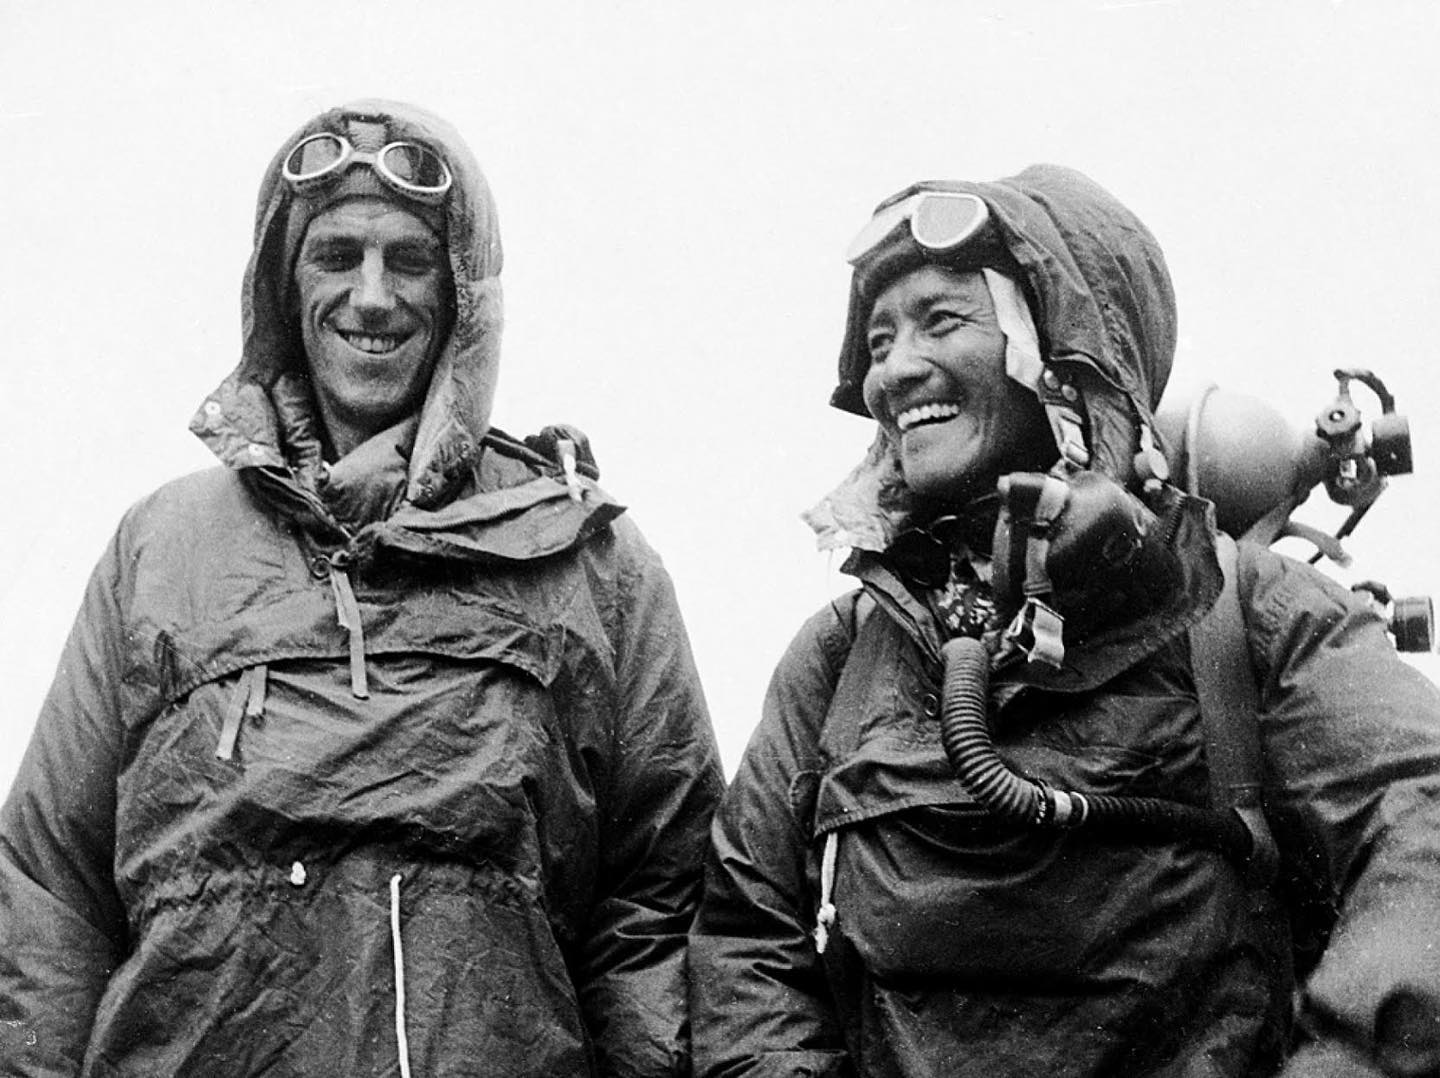 Edmund Hillary and Sherpa Tenzing Norgay on Mount Everest